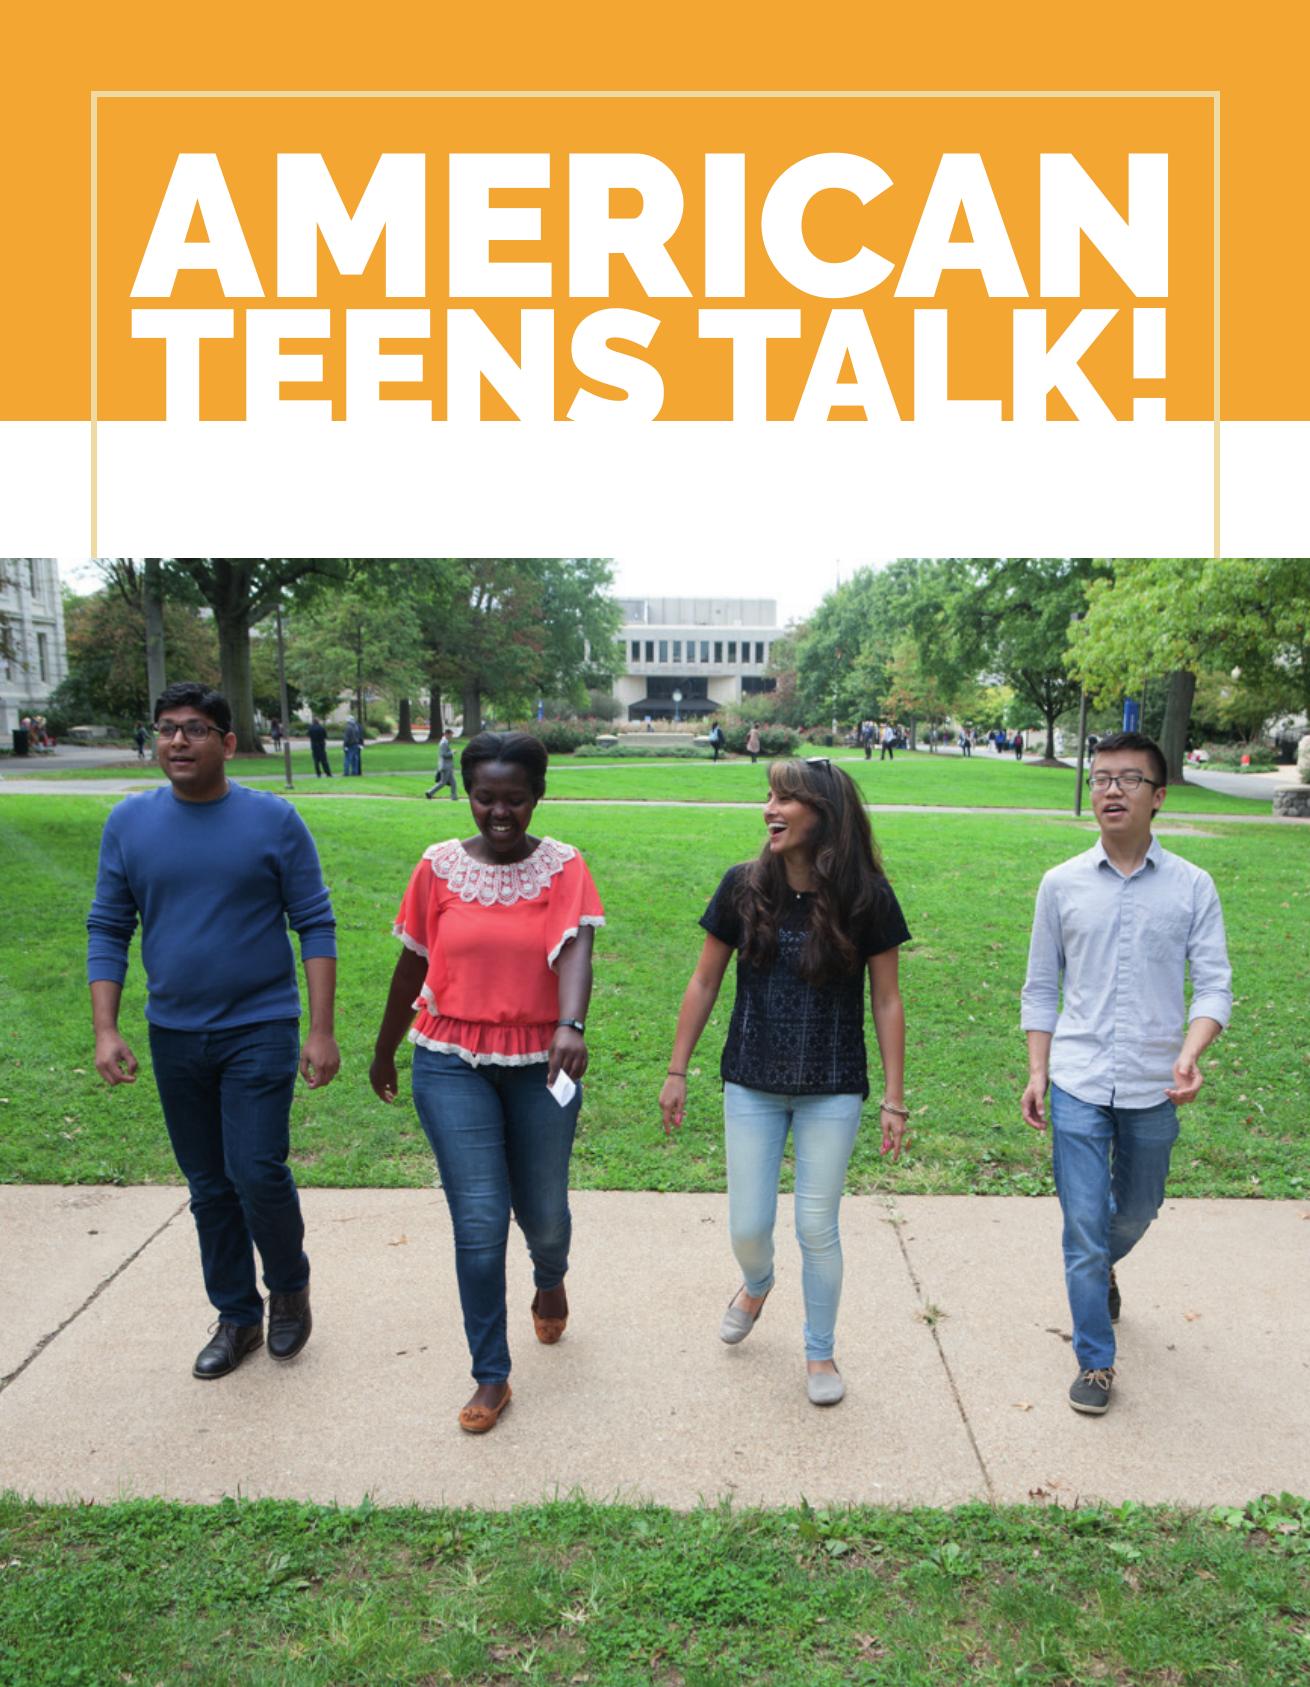 American Teens Talk!